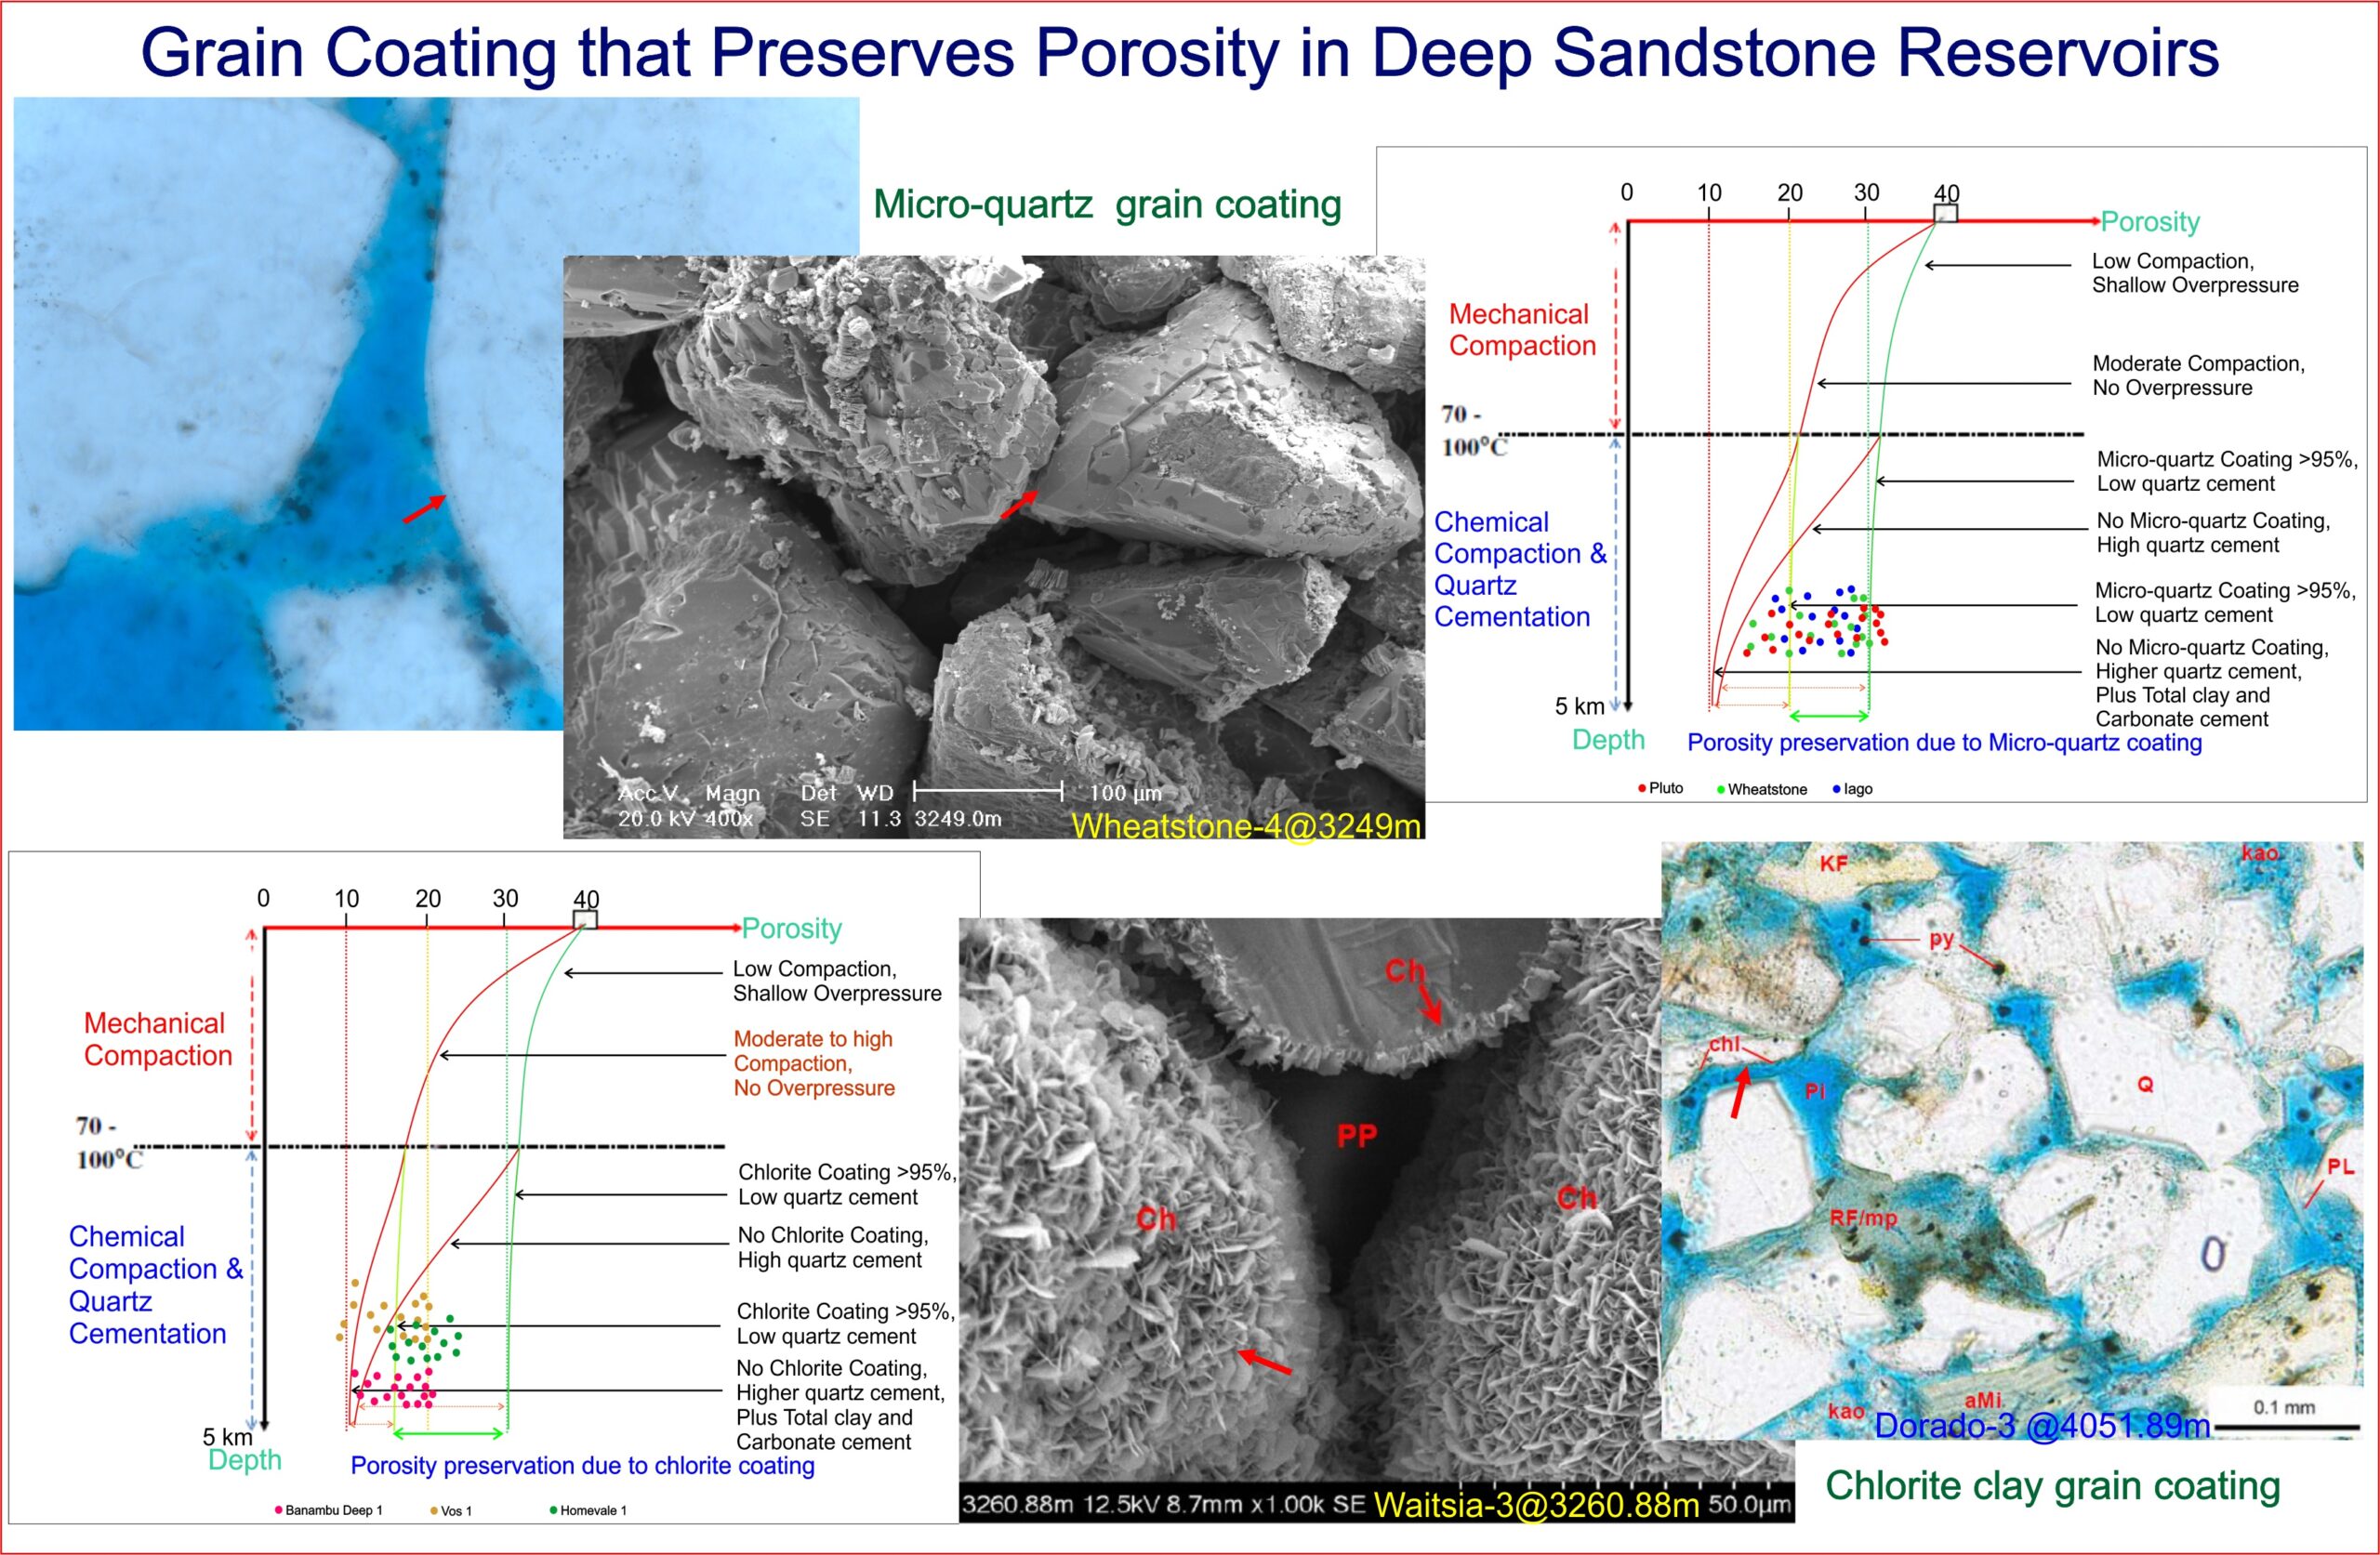 LIVE WEBINAR: Significance of Grain Coating that Preserves Porosity in Deep Sandstone Reservoirs: Case Studies from Australian Basins